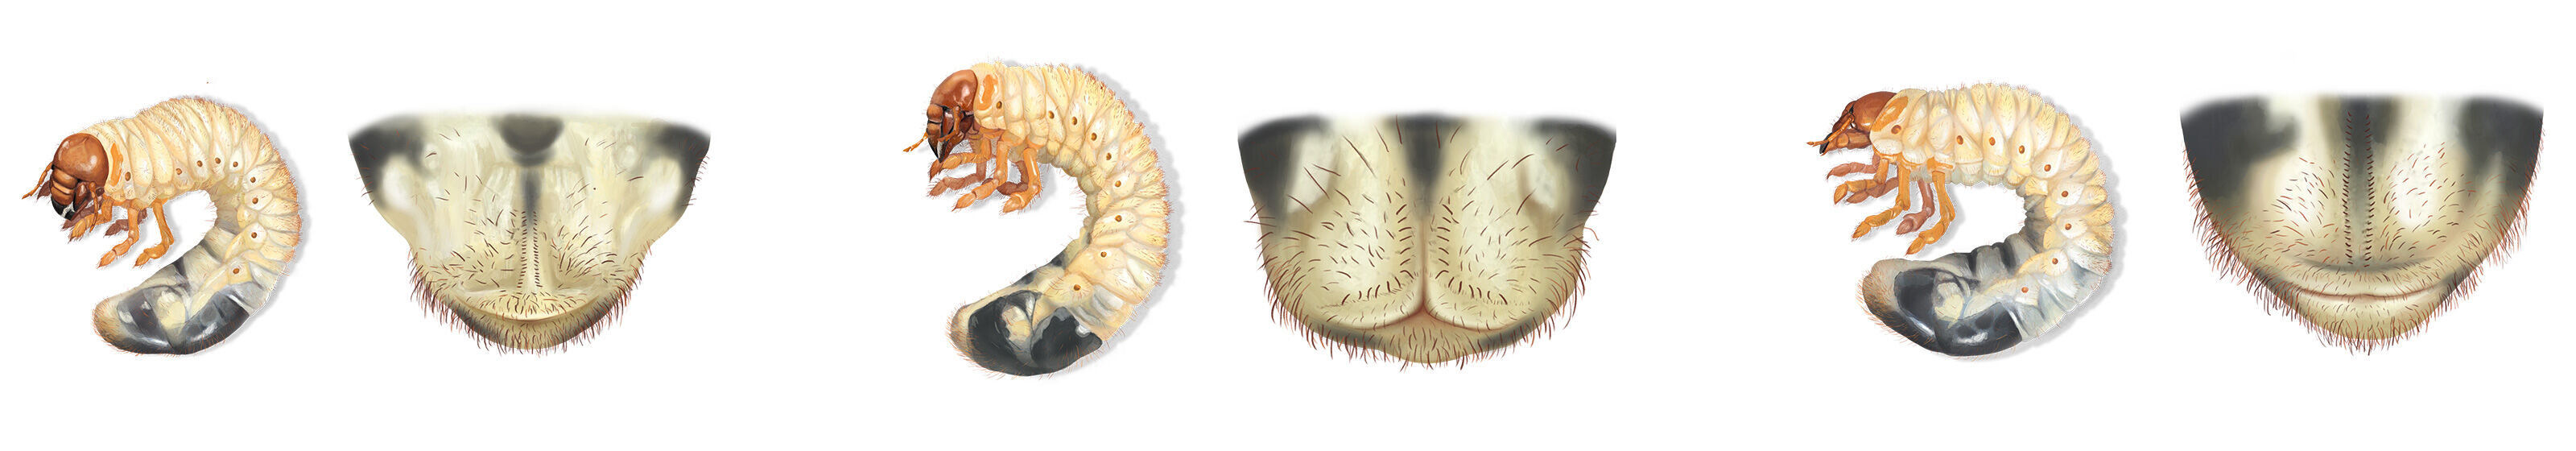 oculus-illustration-pflanzenillustration-hauert-verpackungsdesign-larven